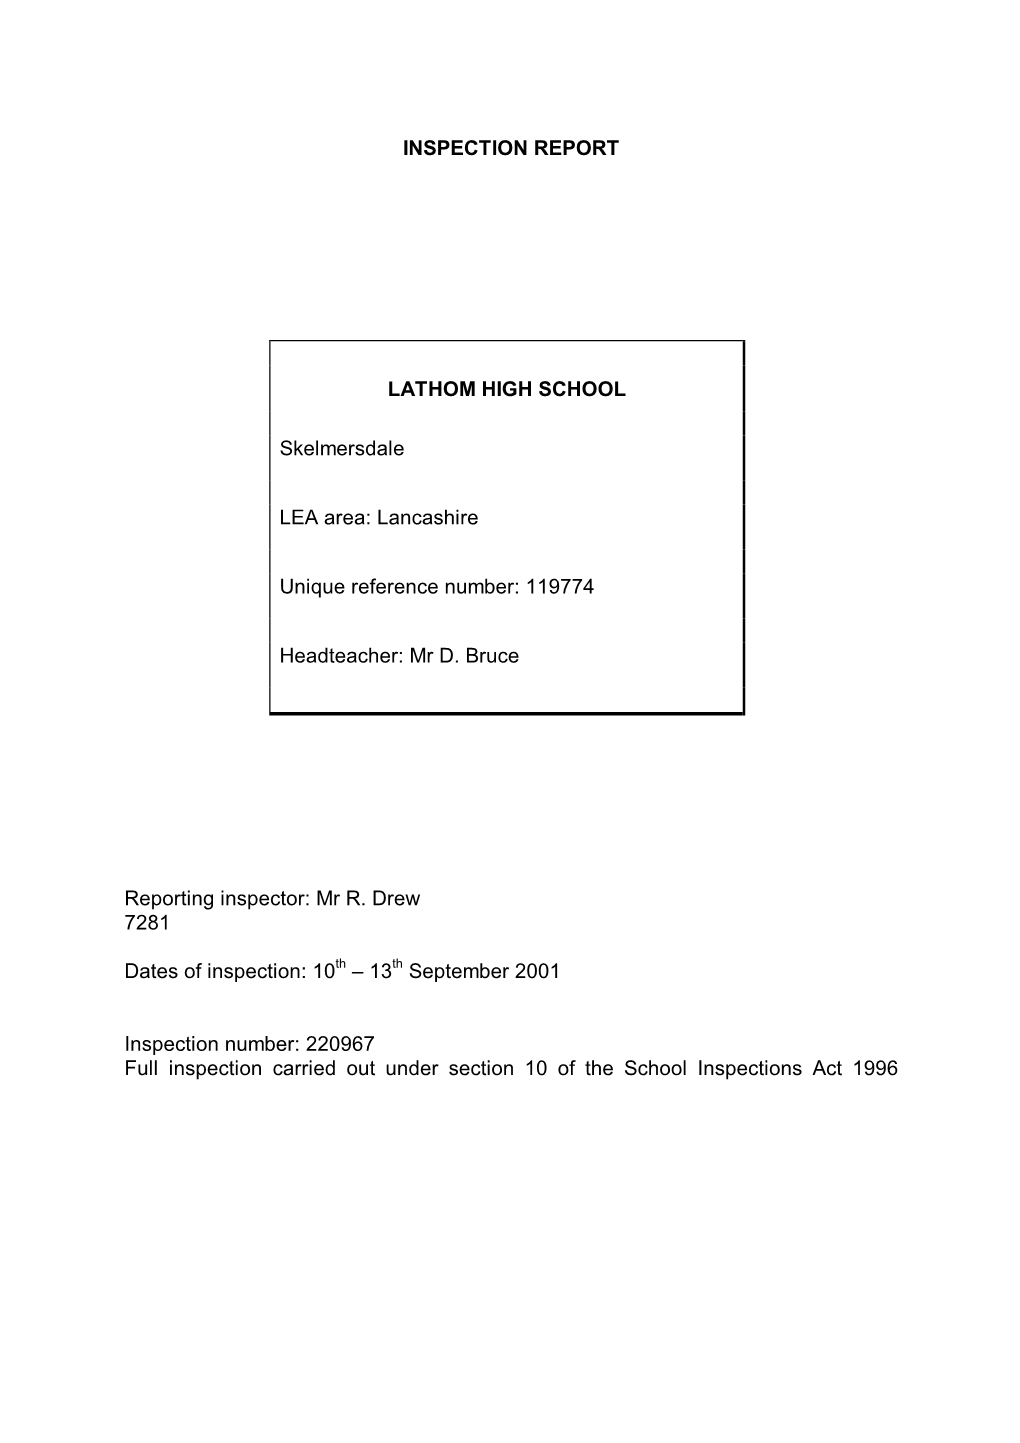 INSPECTION REPORT LATHOM HIGH SCHOOL Skelmersdale LEA